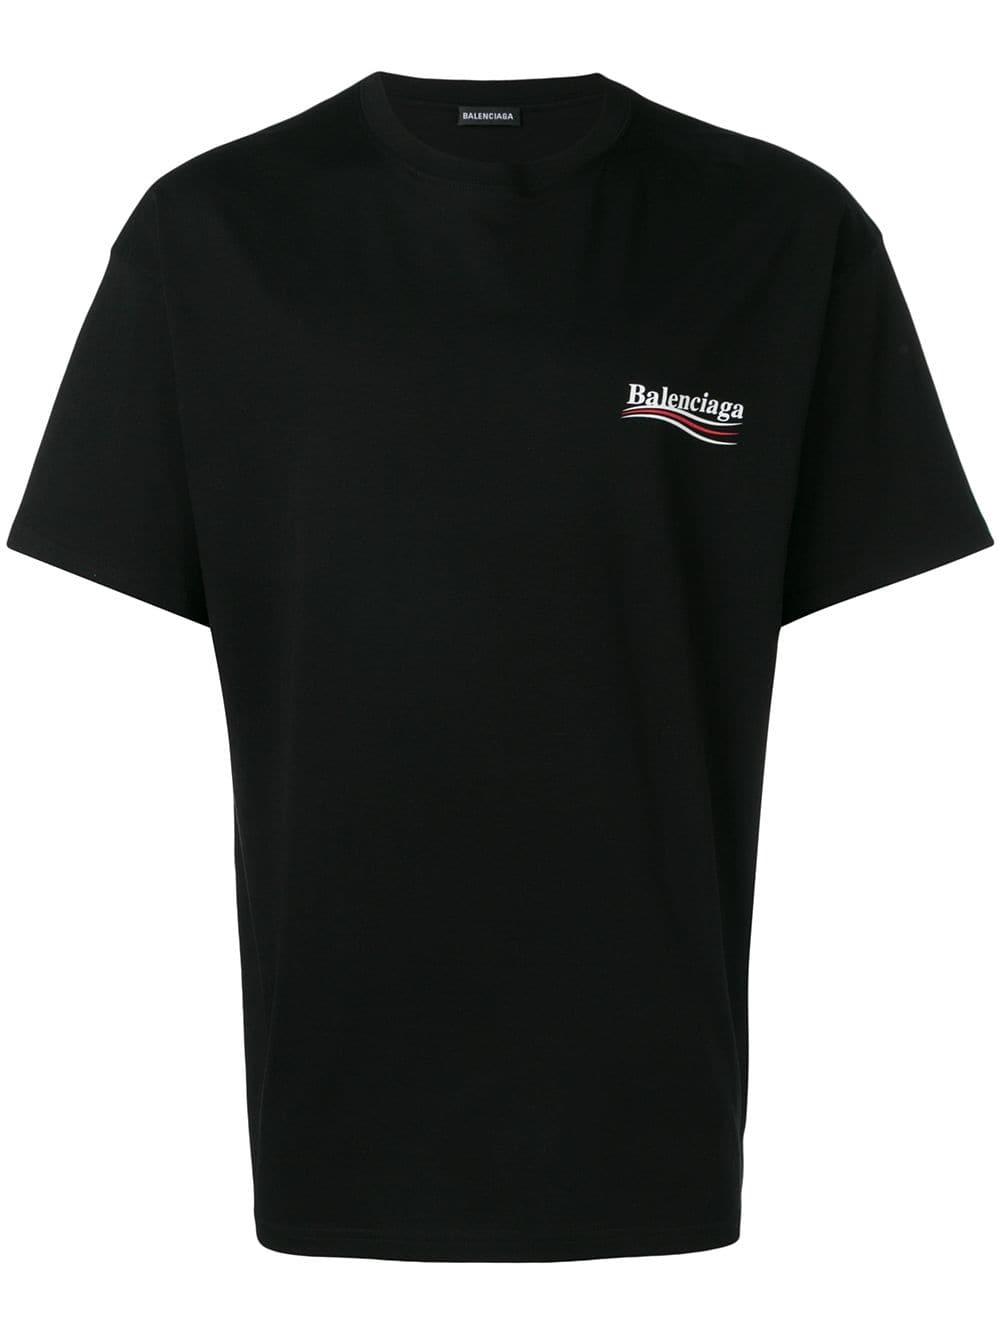 Balenciaga Cotton Political Campaign T-shirt in Black for Men - Save 31 ...